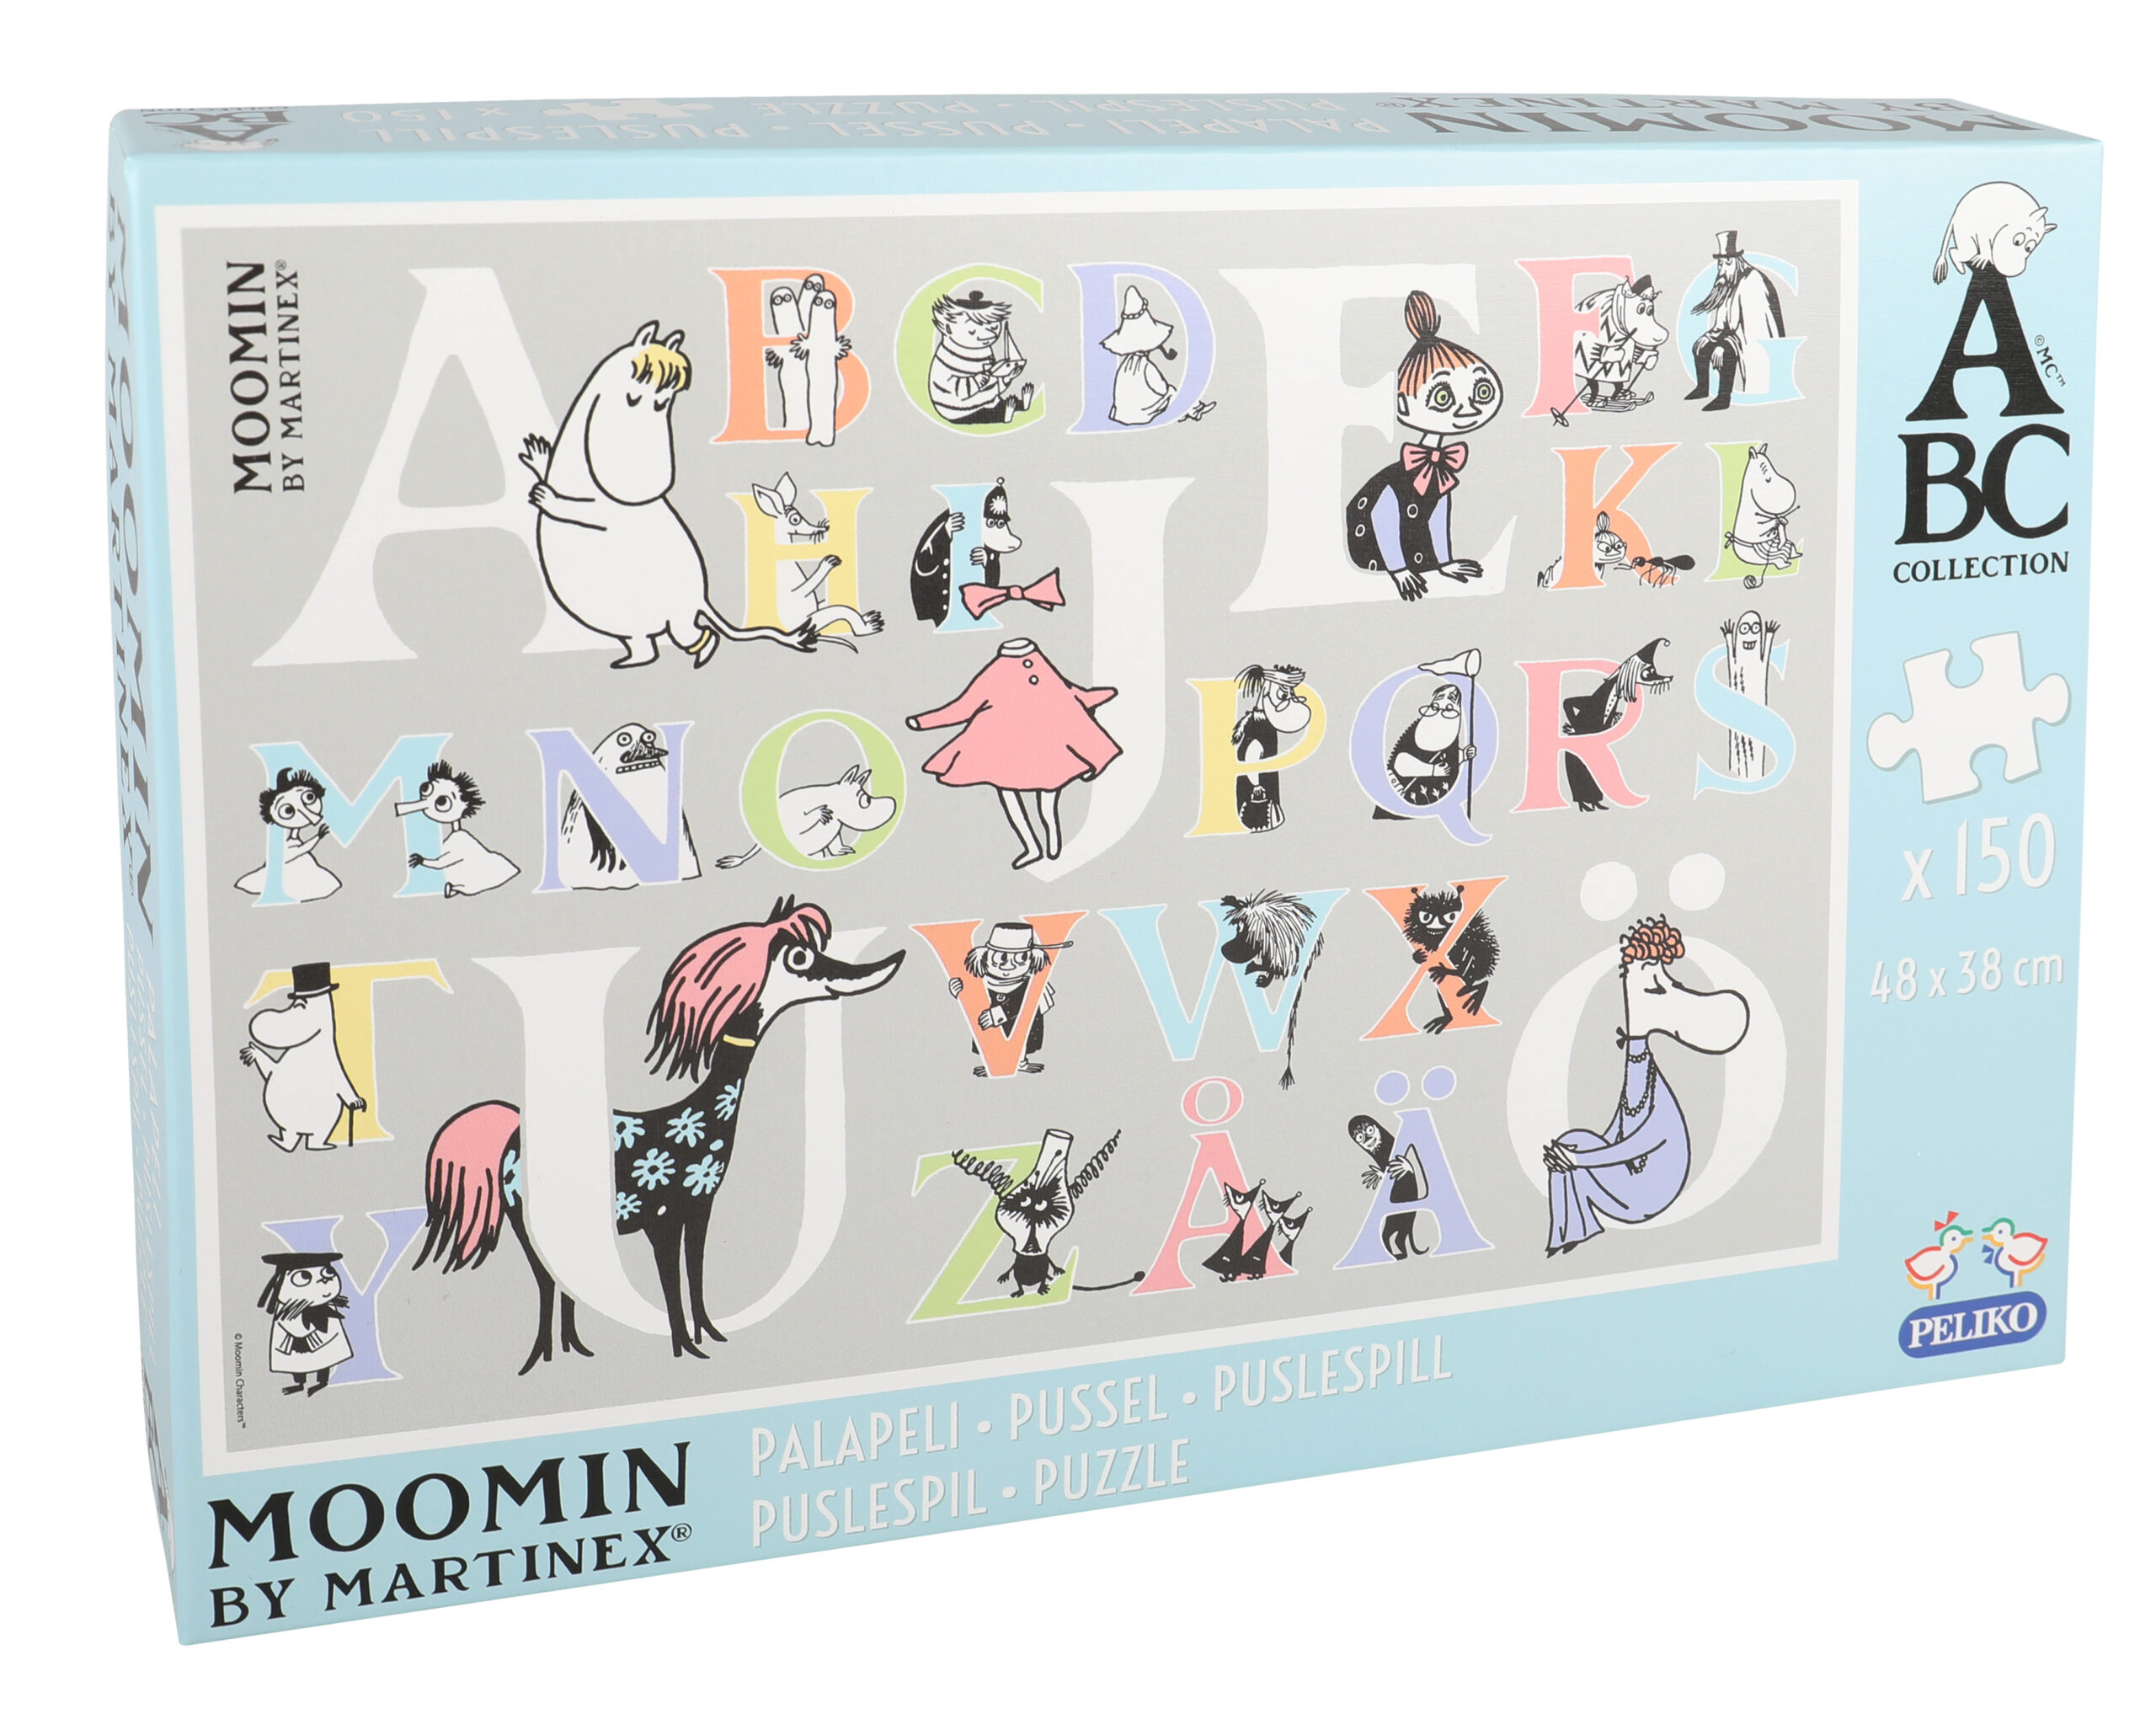 Martinex Moomin Jigsaw Puzzle 150 pieces Alphabet